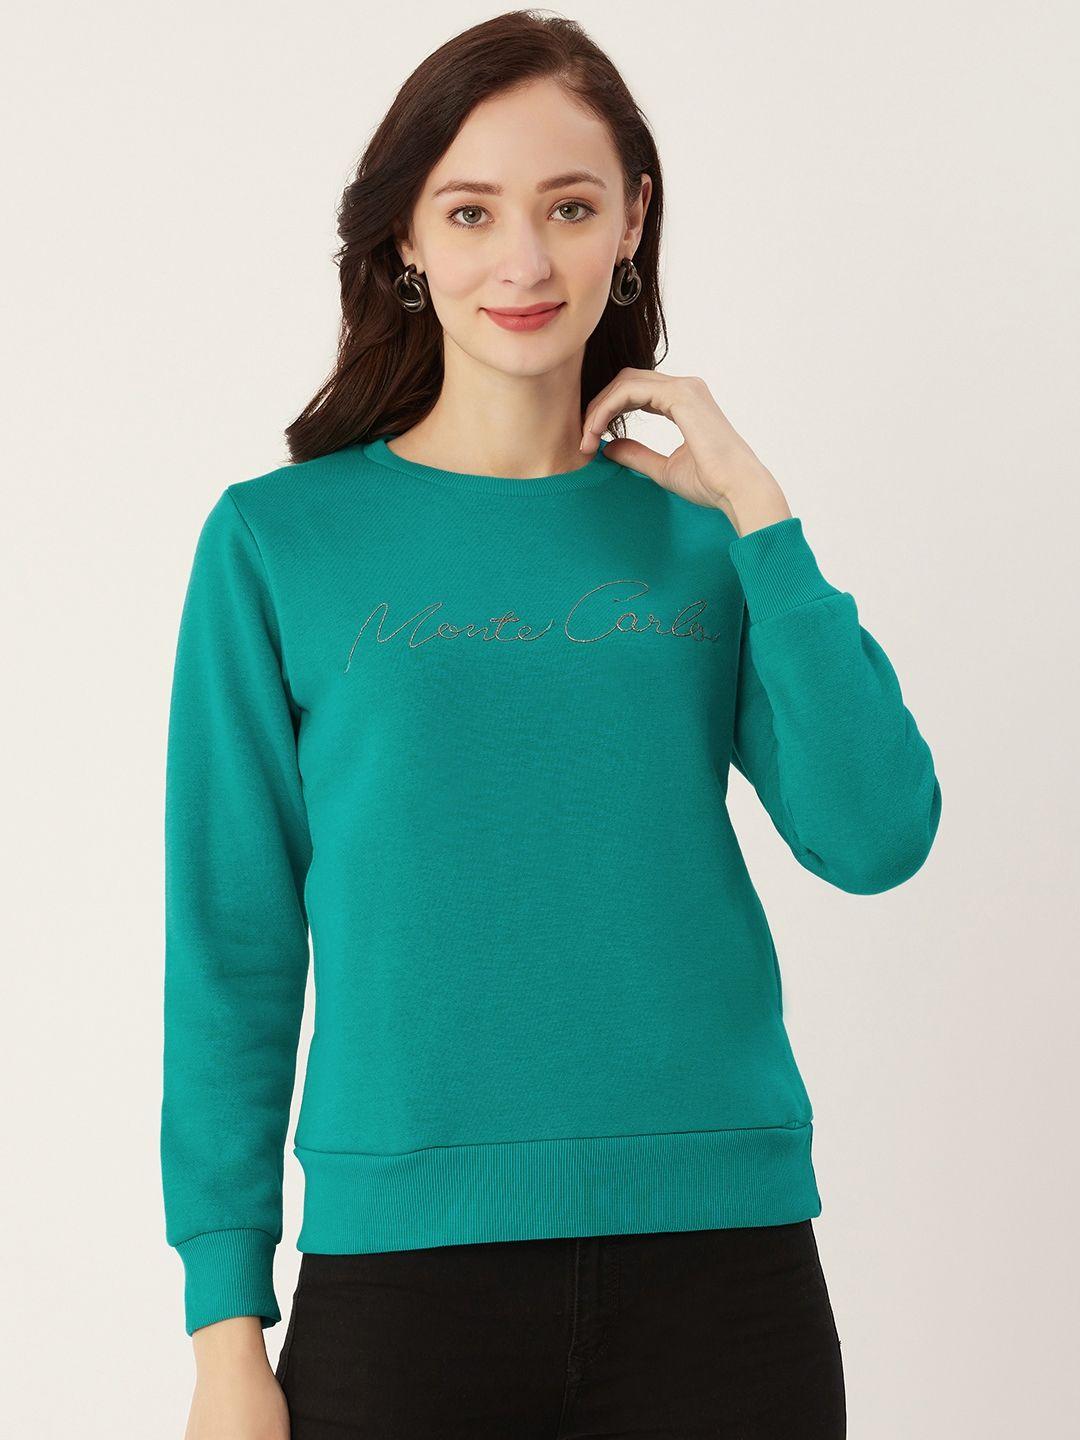 monte carlo women green embroidered sweatshirt